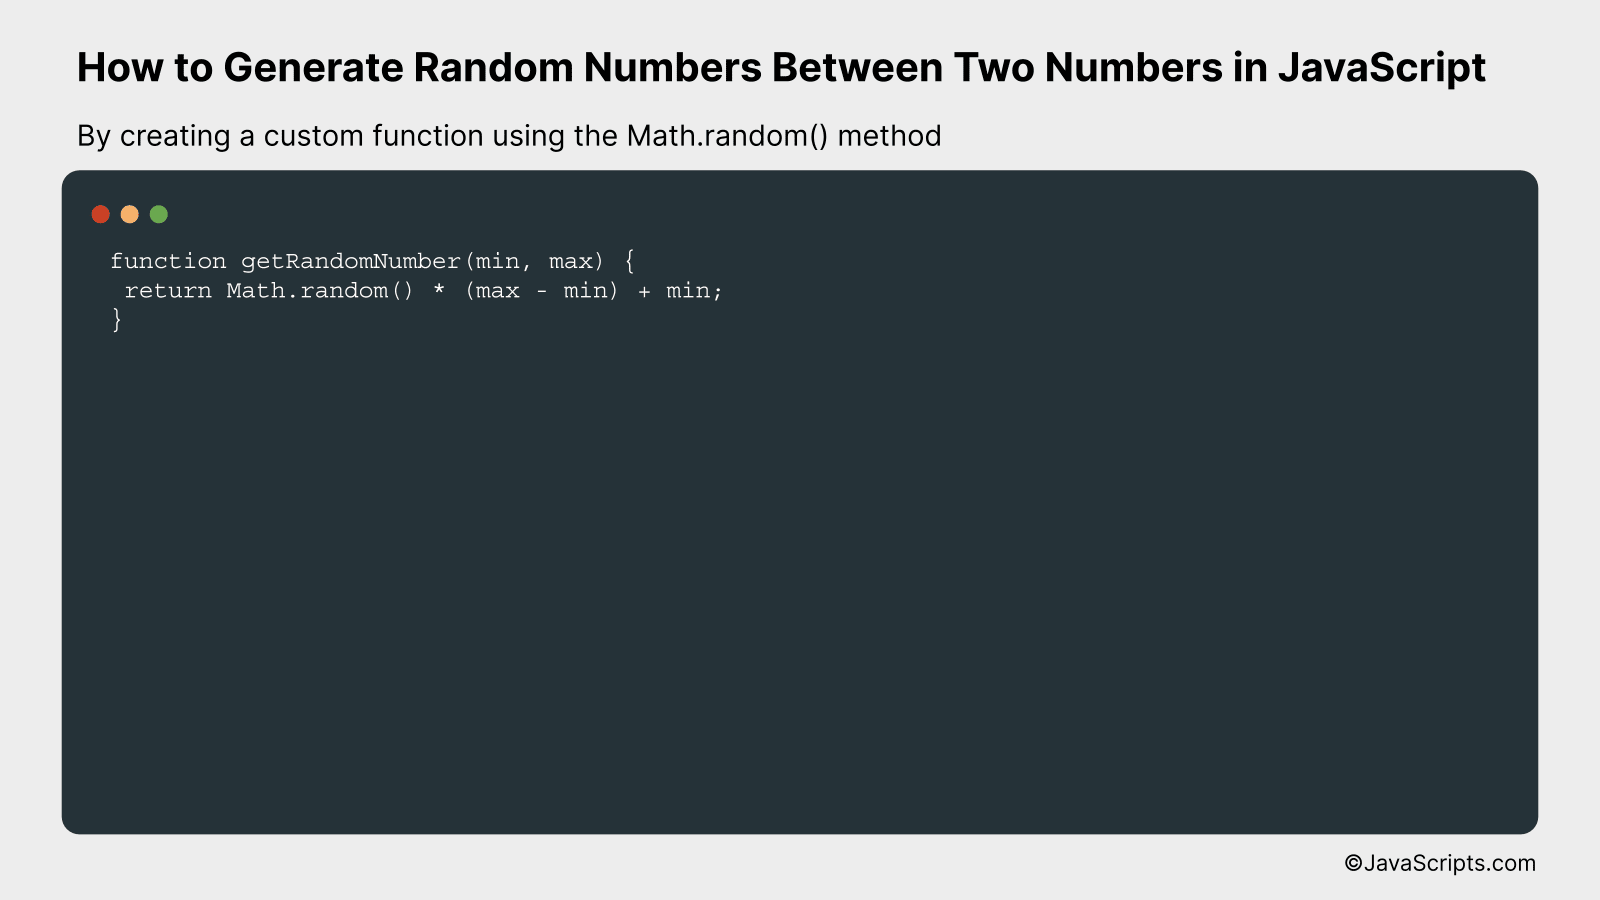 By creating a custom function using the Math.random() method